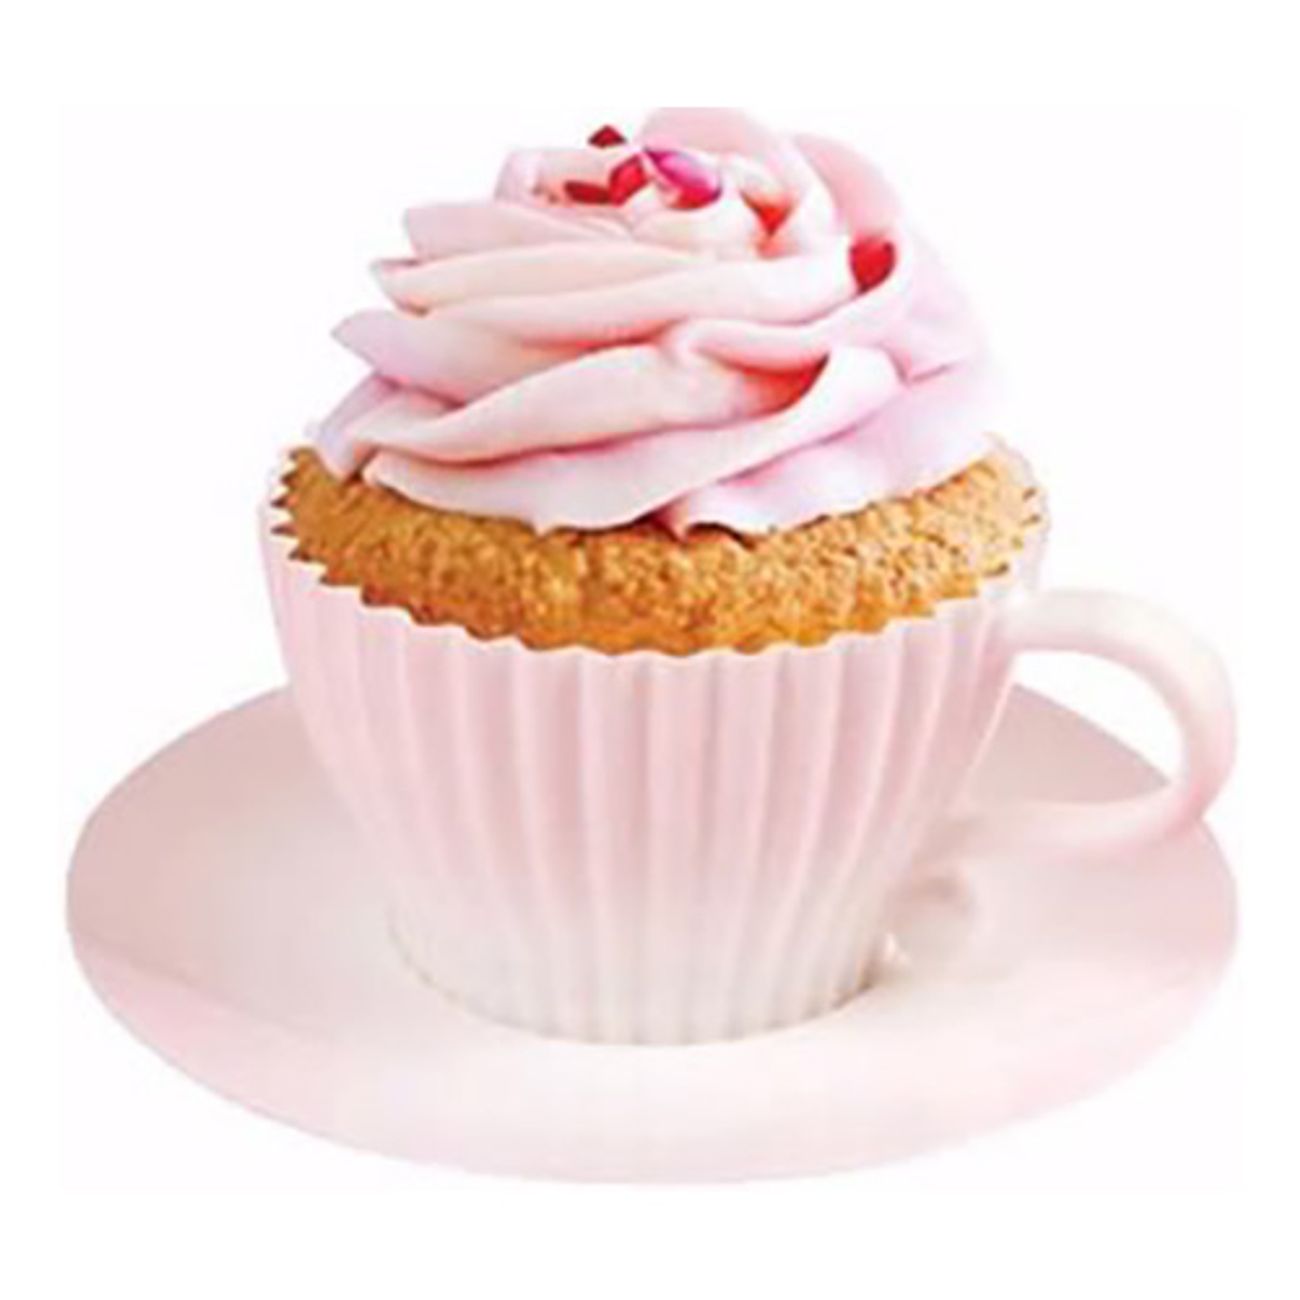 cupcake-muggar-afternoon-tea-1